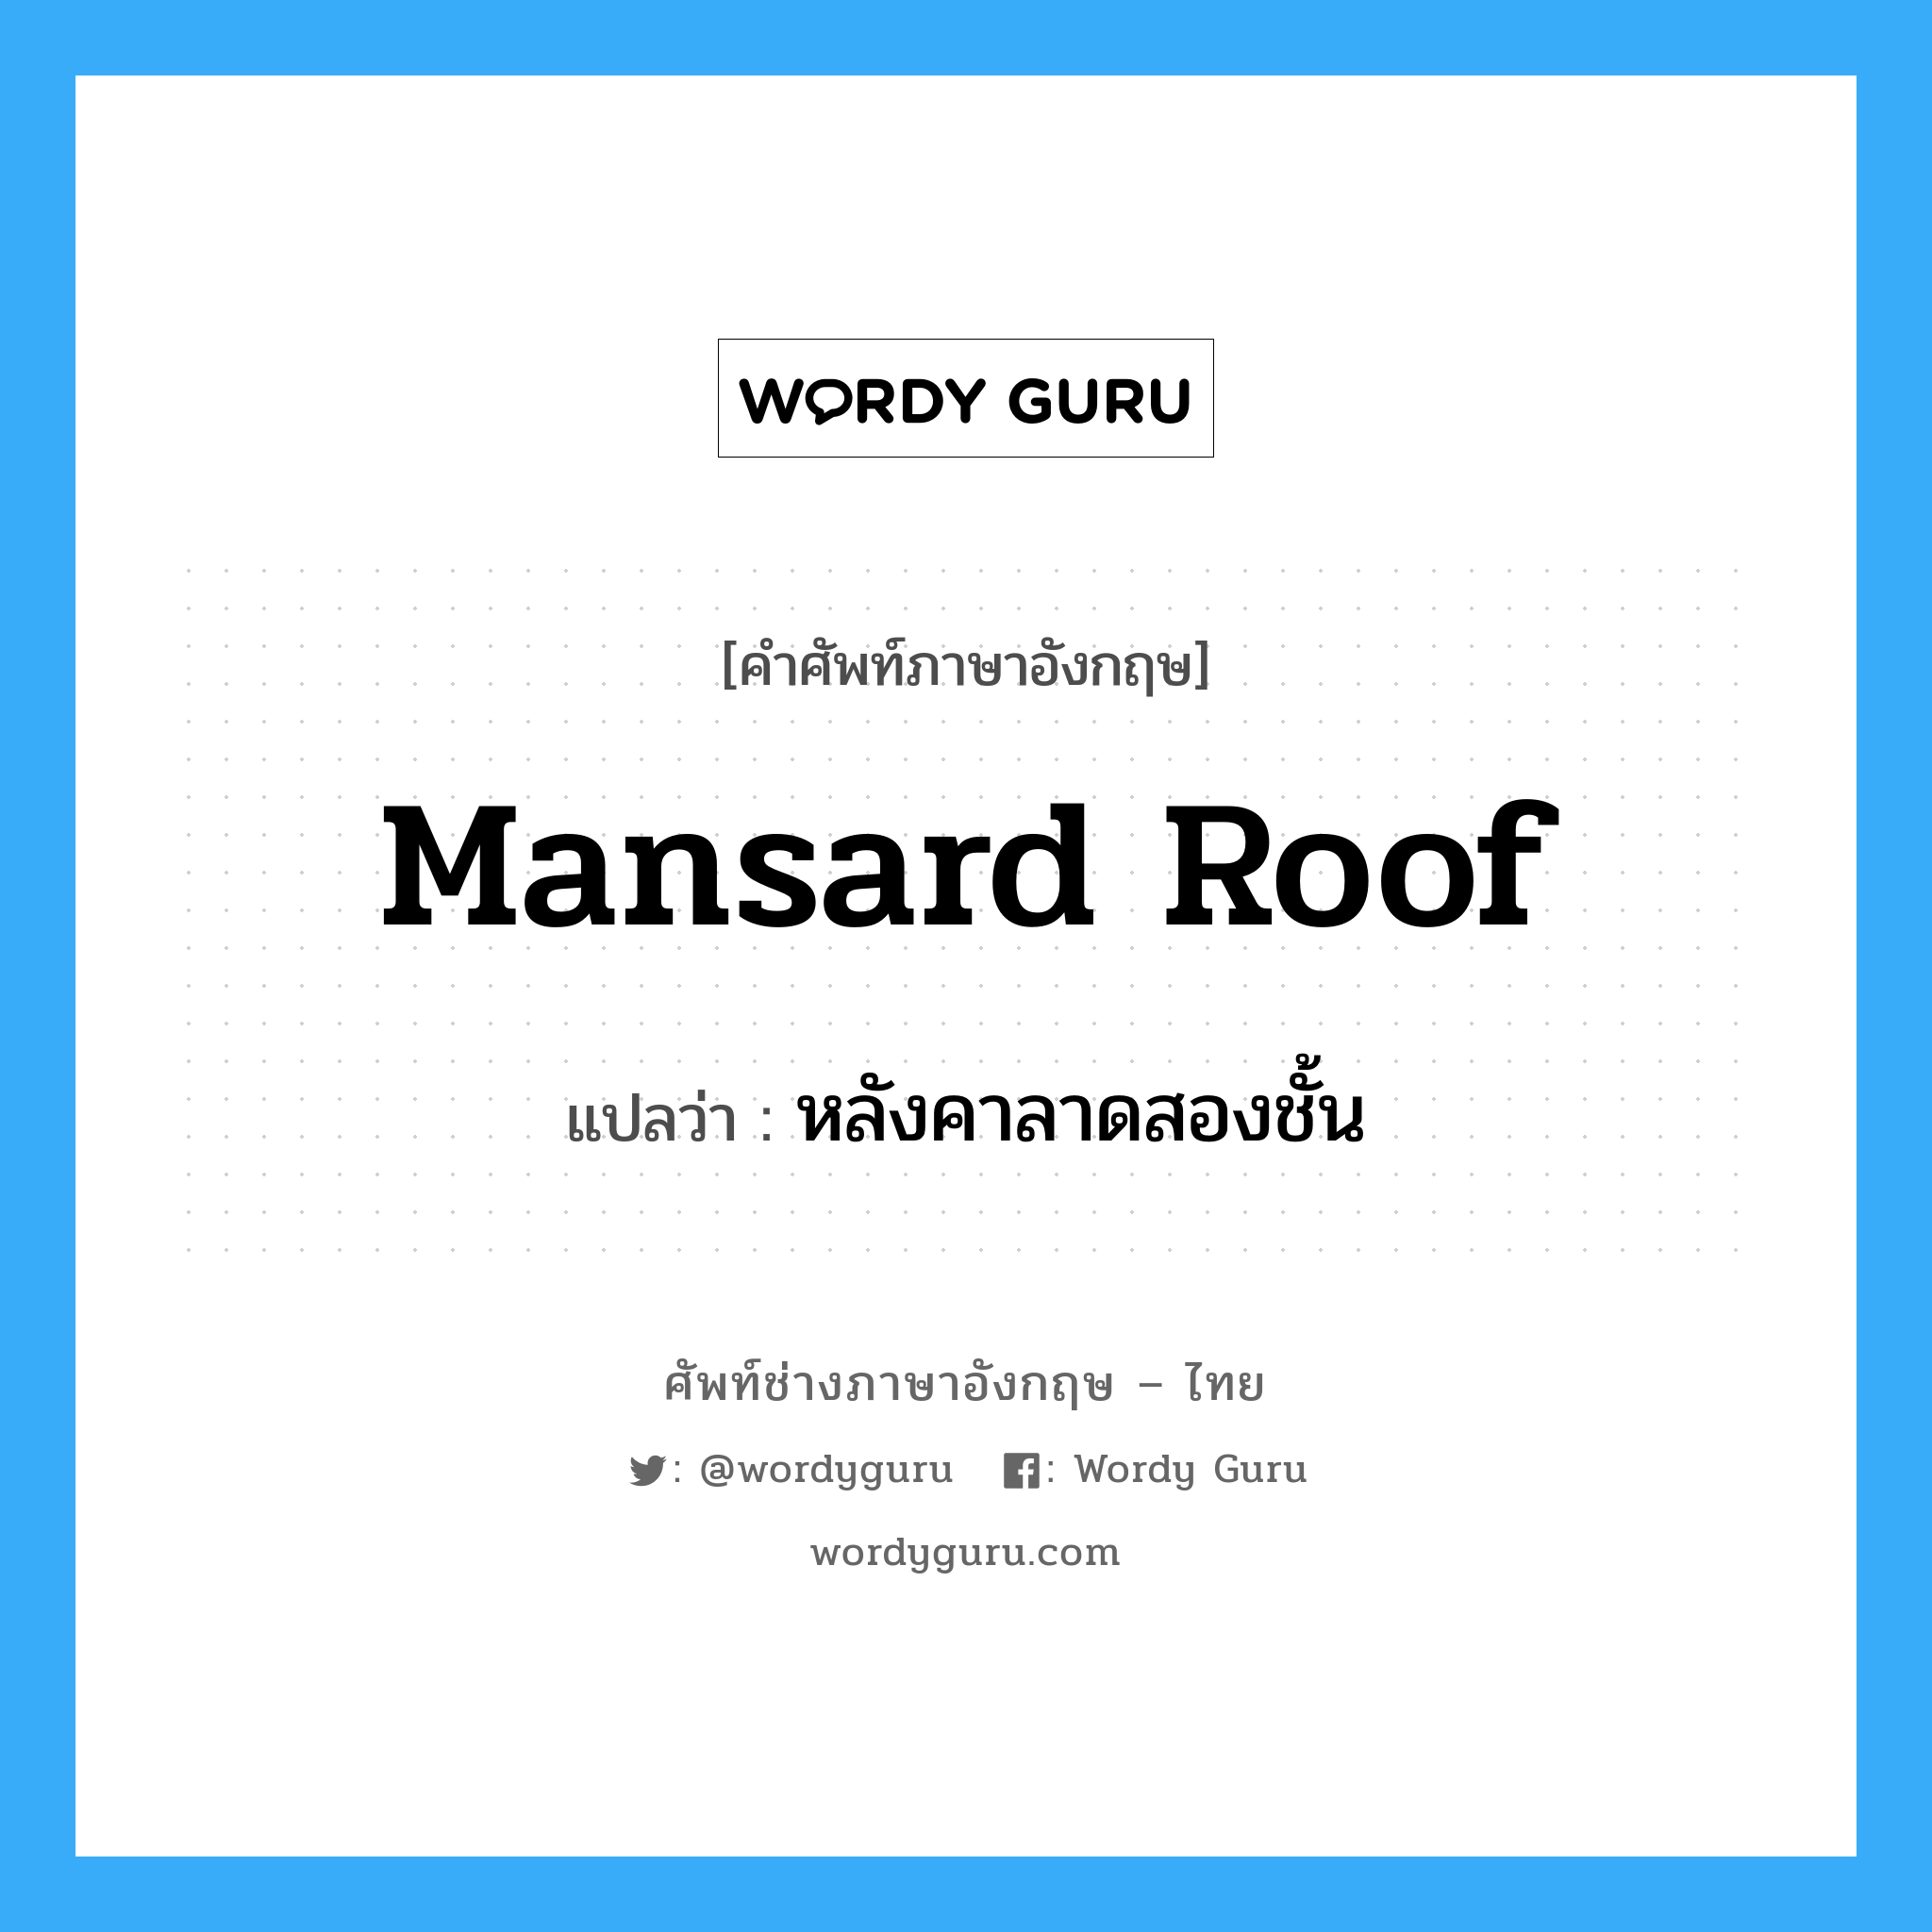 mansard roof แปลว่า?, คำศัพท์ช่างภาษาอังกฤษ - ไทย mansard roof คำศัพท์ภาษาอังกฤษ mansard roof แปลว่า หลังคาลาดสองชั้น